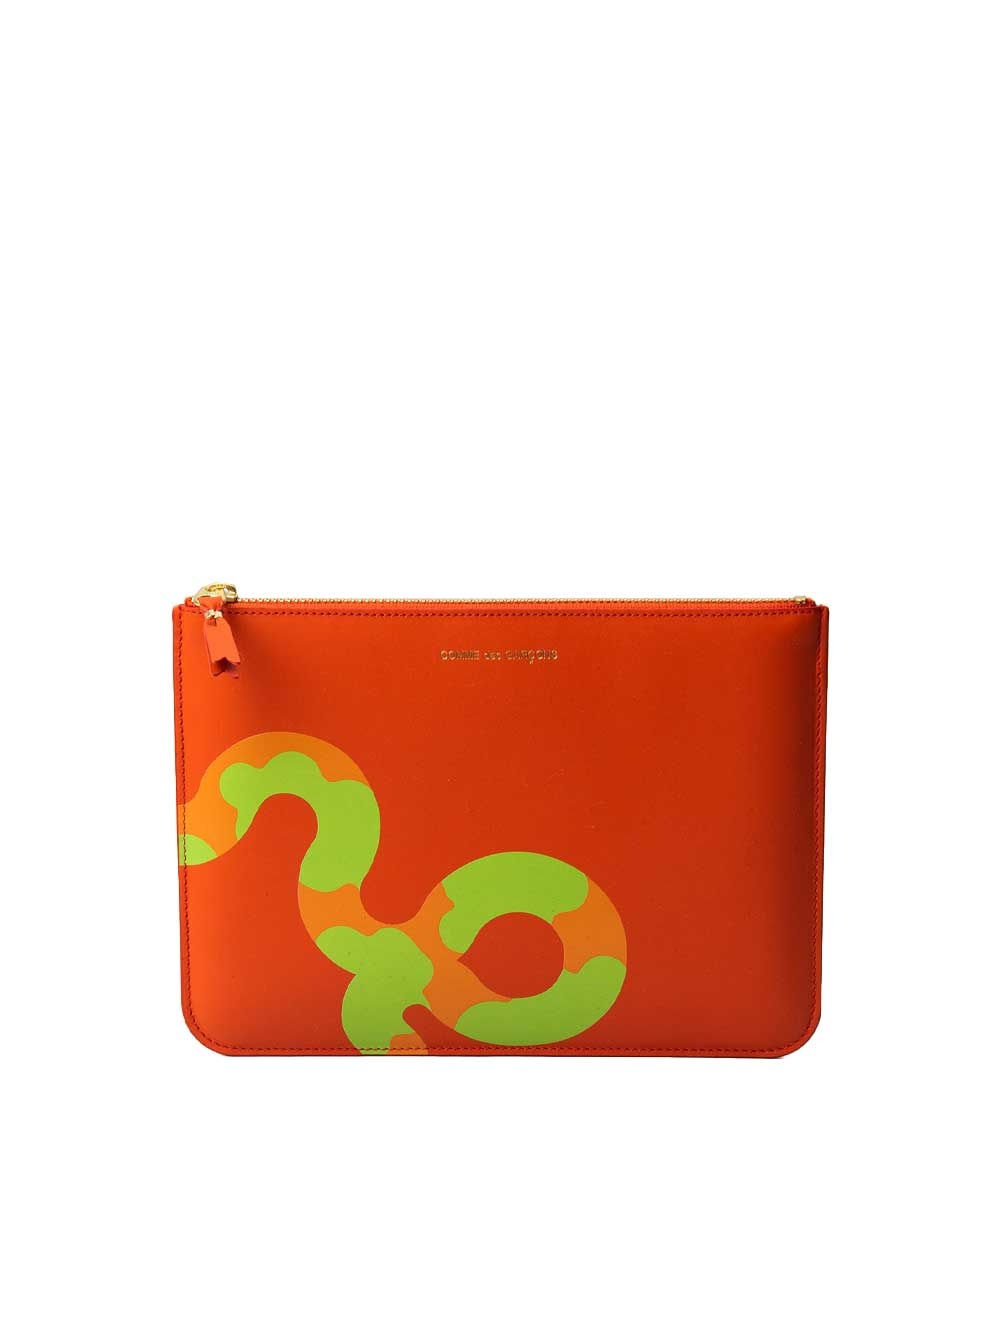 Clutch Bag In Orange Special Edition - 1